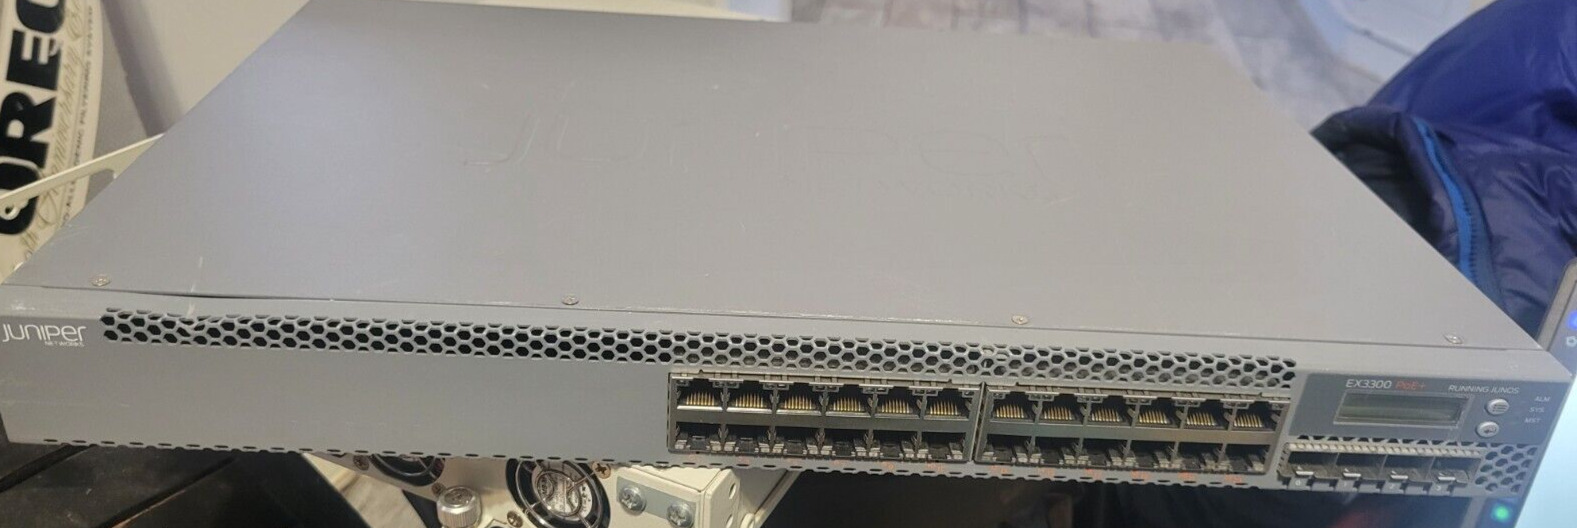 Juniper EX3300-24P 24 X 10/100/1000 4 X 10  PoE+Gigabit  Ethernet Switch tested